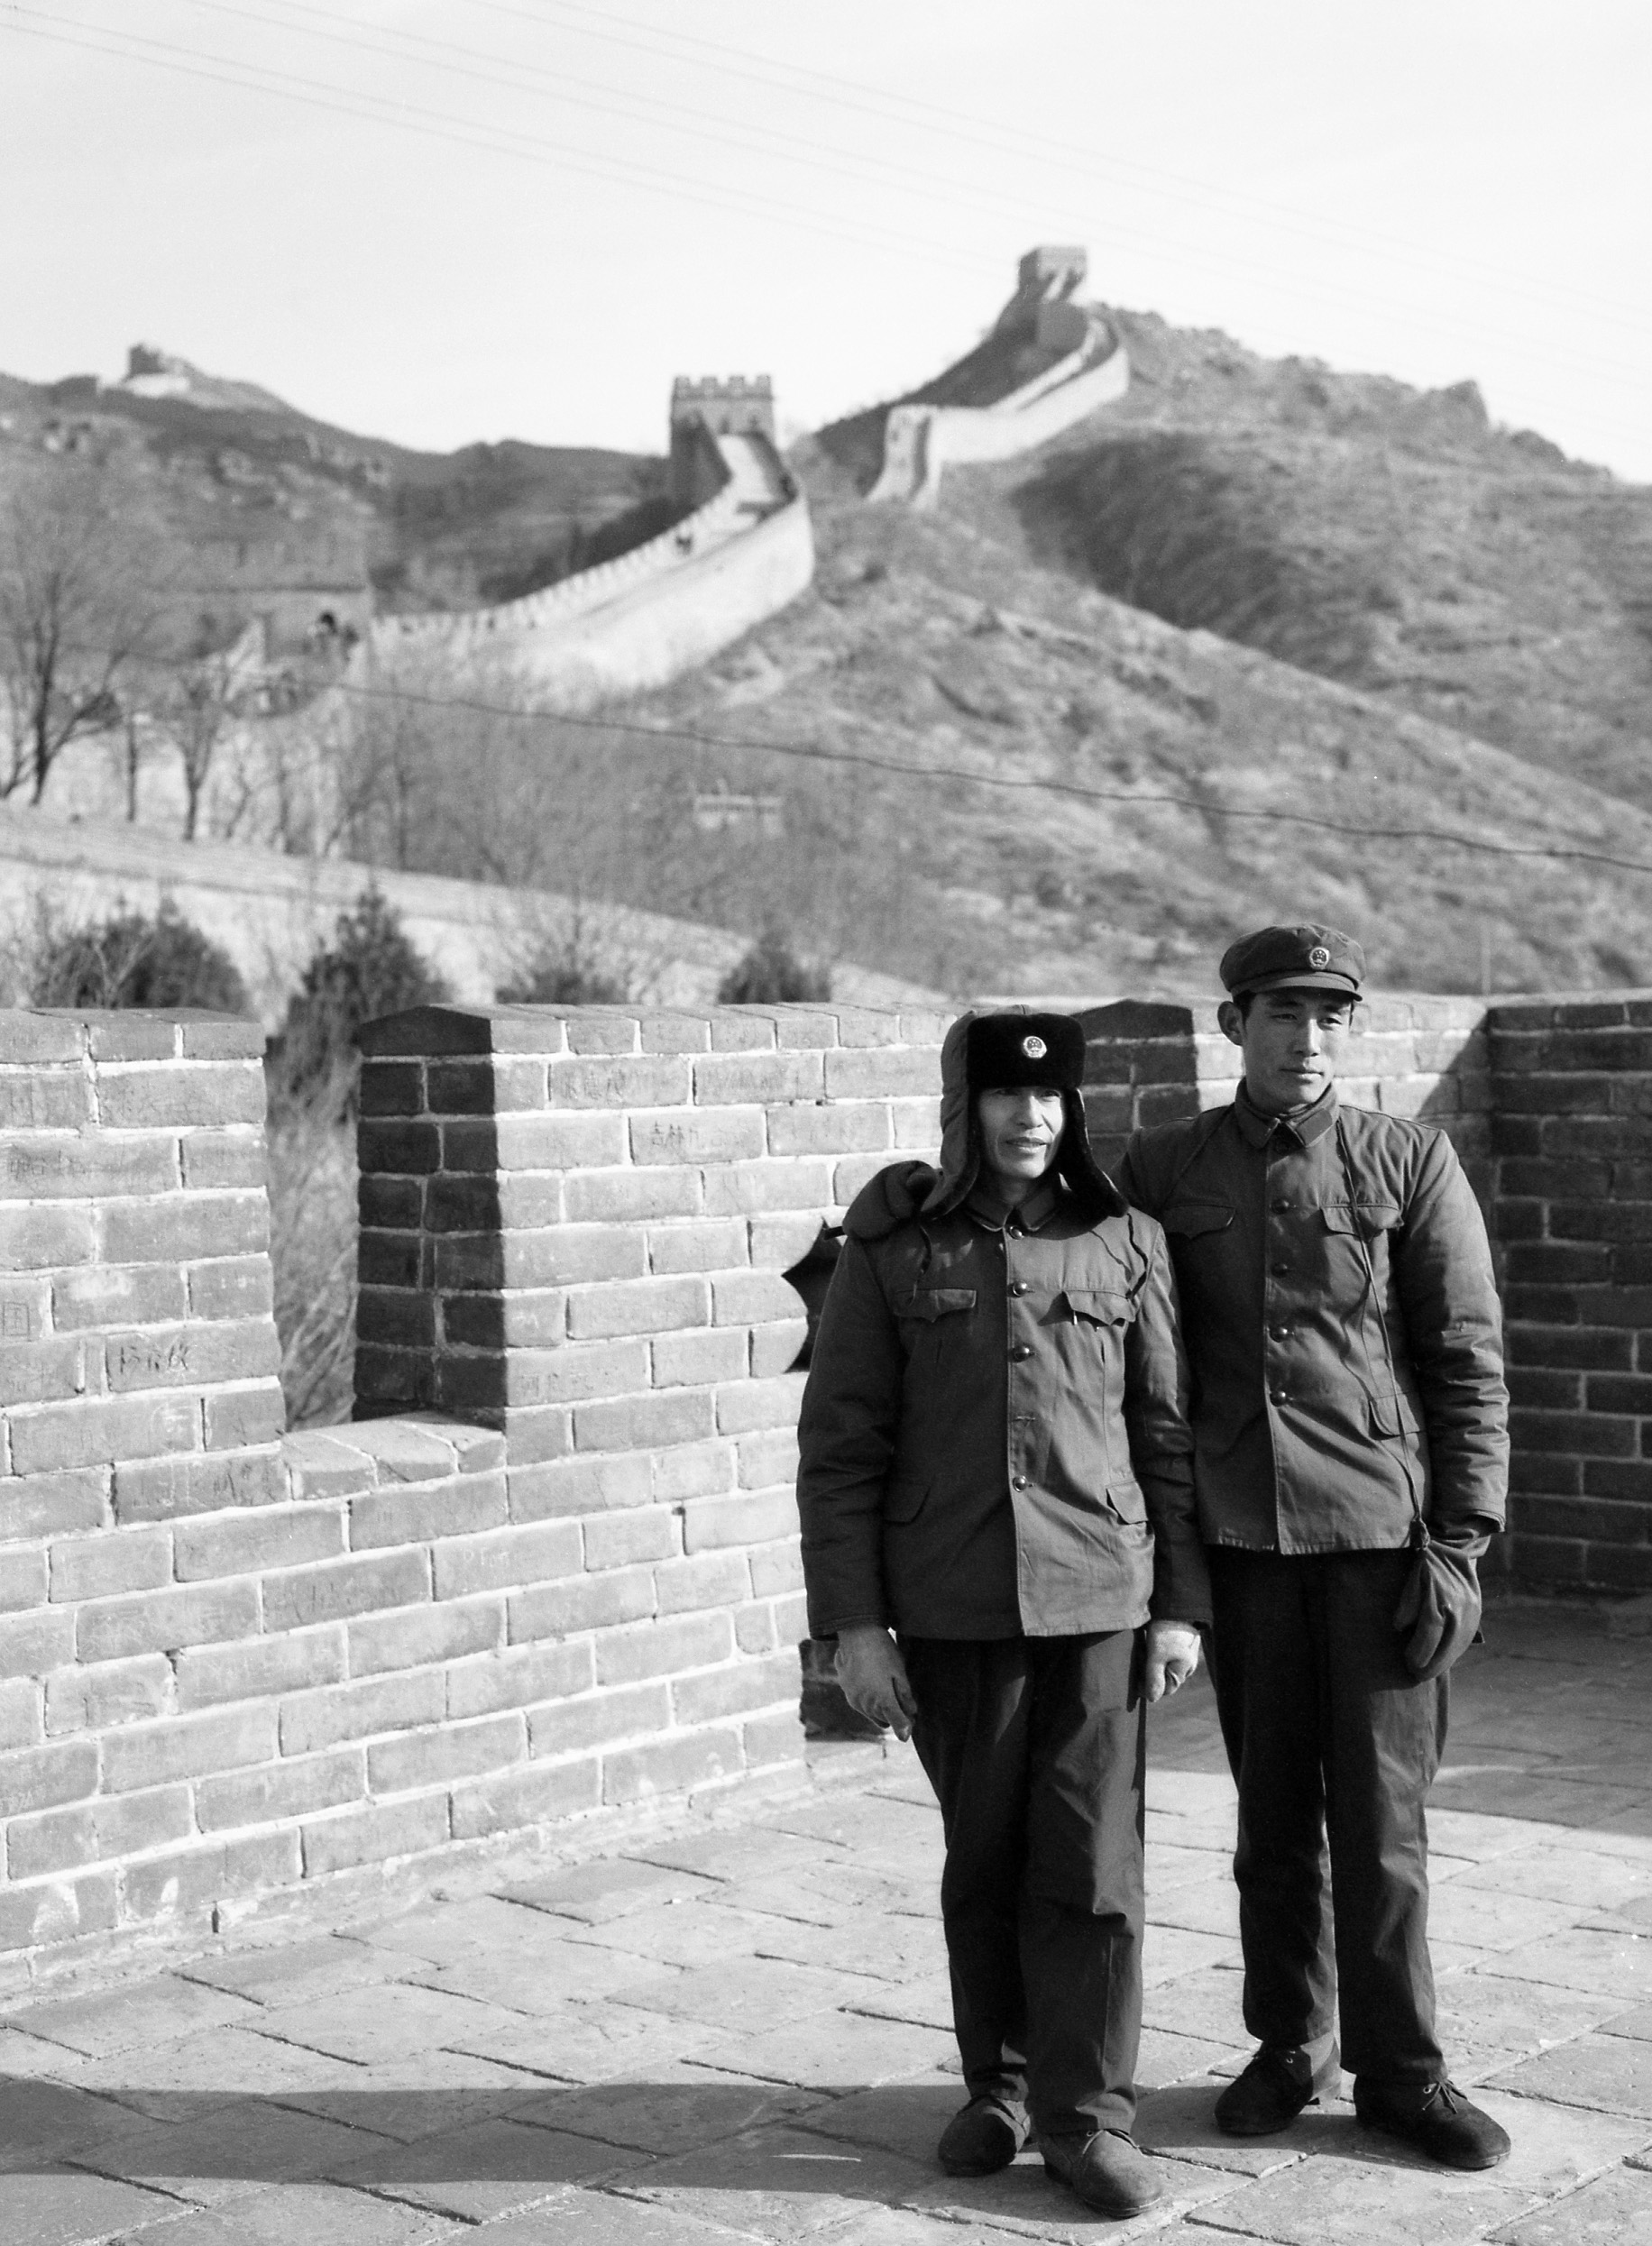 1982 China photographs